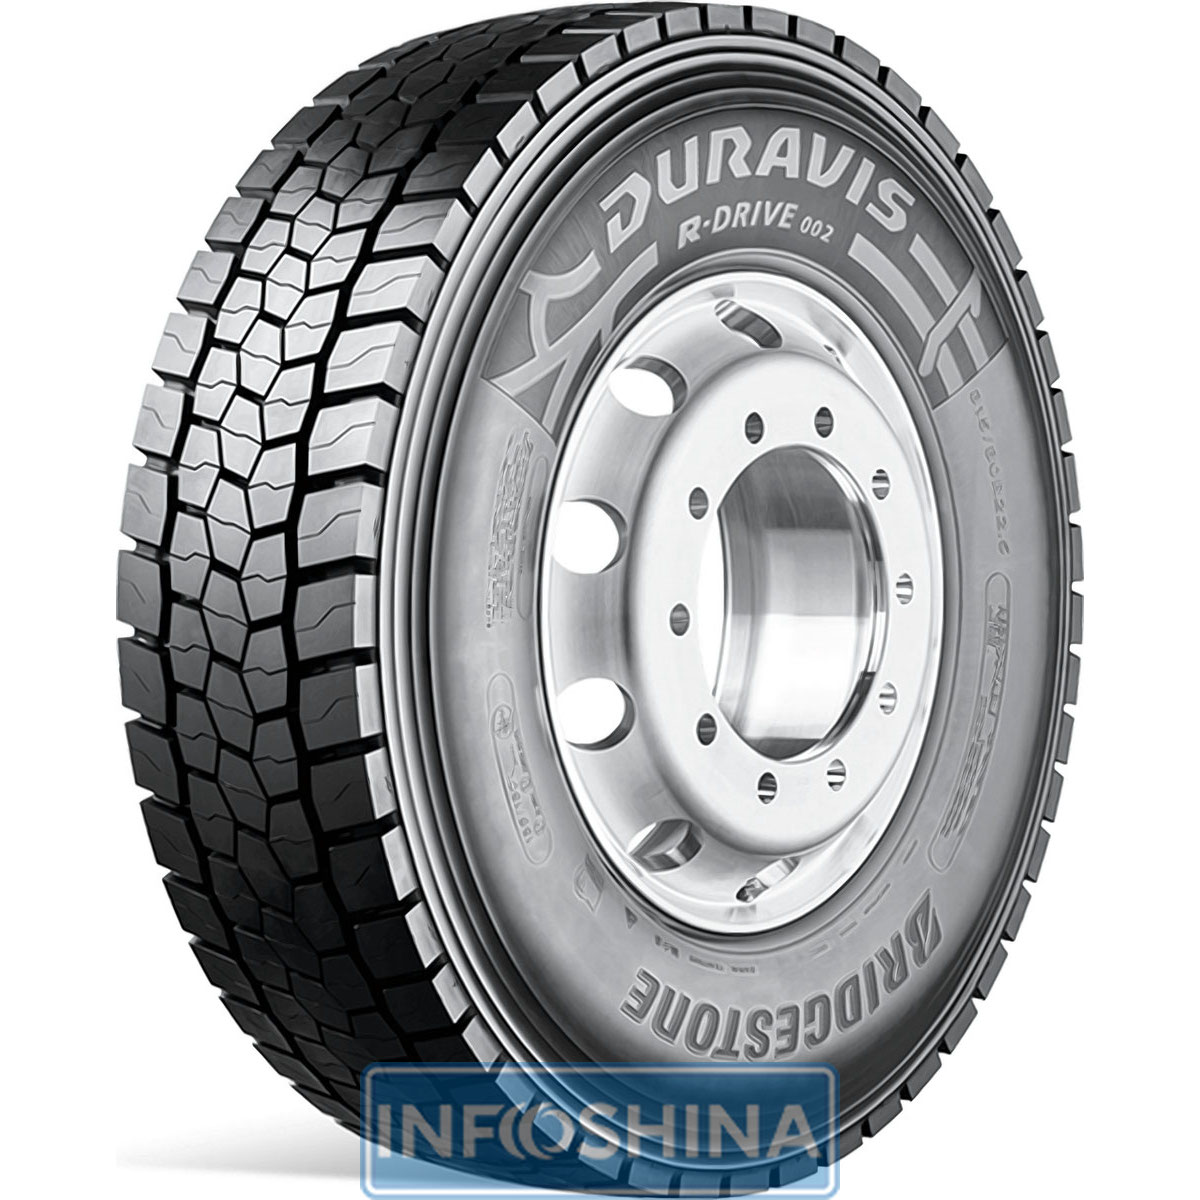 Купить шины Bridgestone Duravis R-Drive 002 (ведущая ось) 295/60 R22.5 150/147L